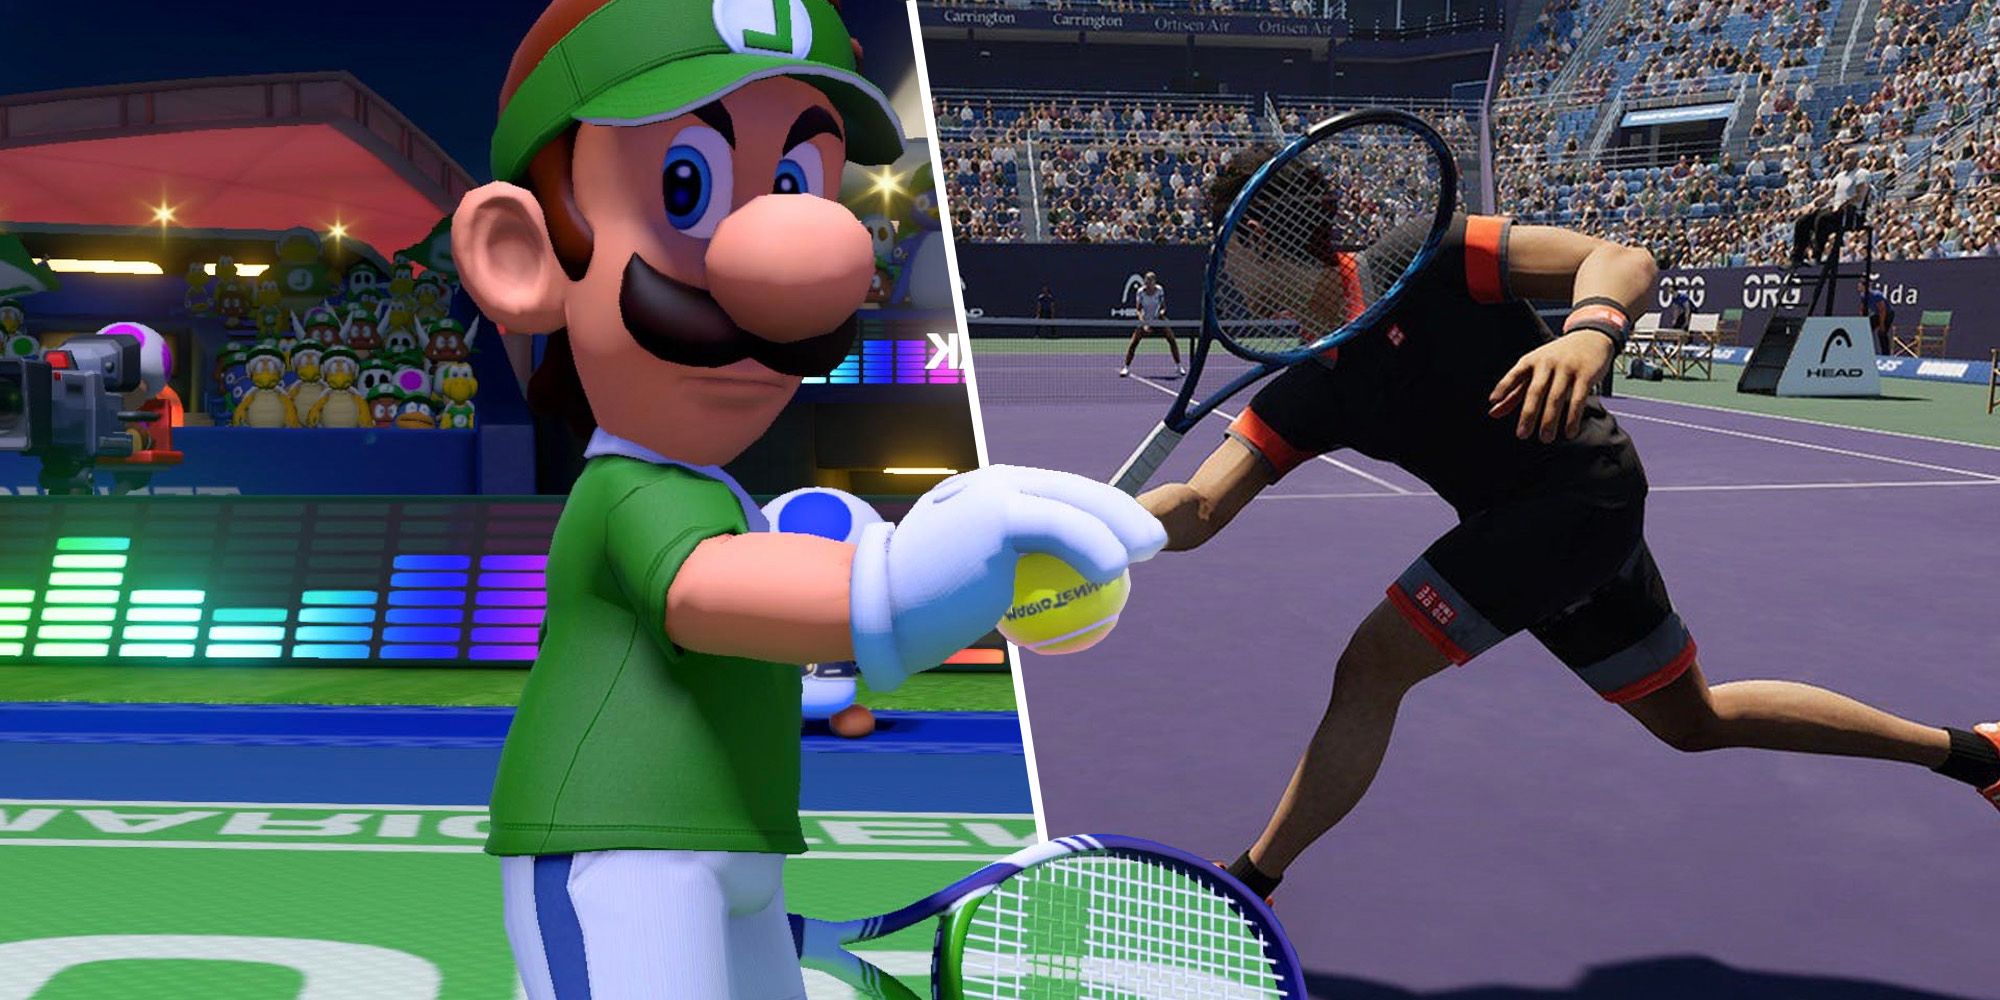 luigi versus a tennis player from matchpoint tennis championships 